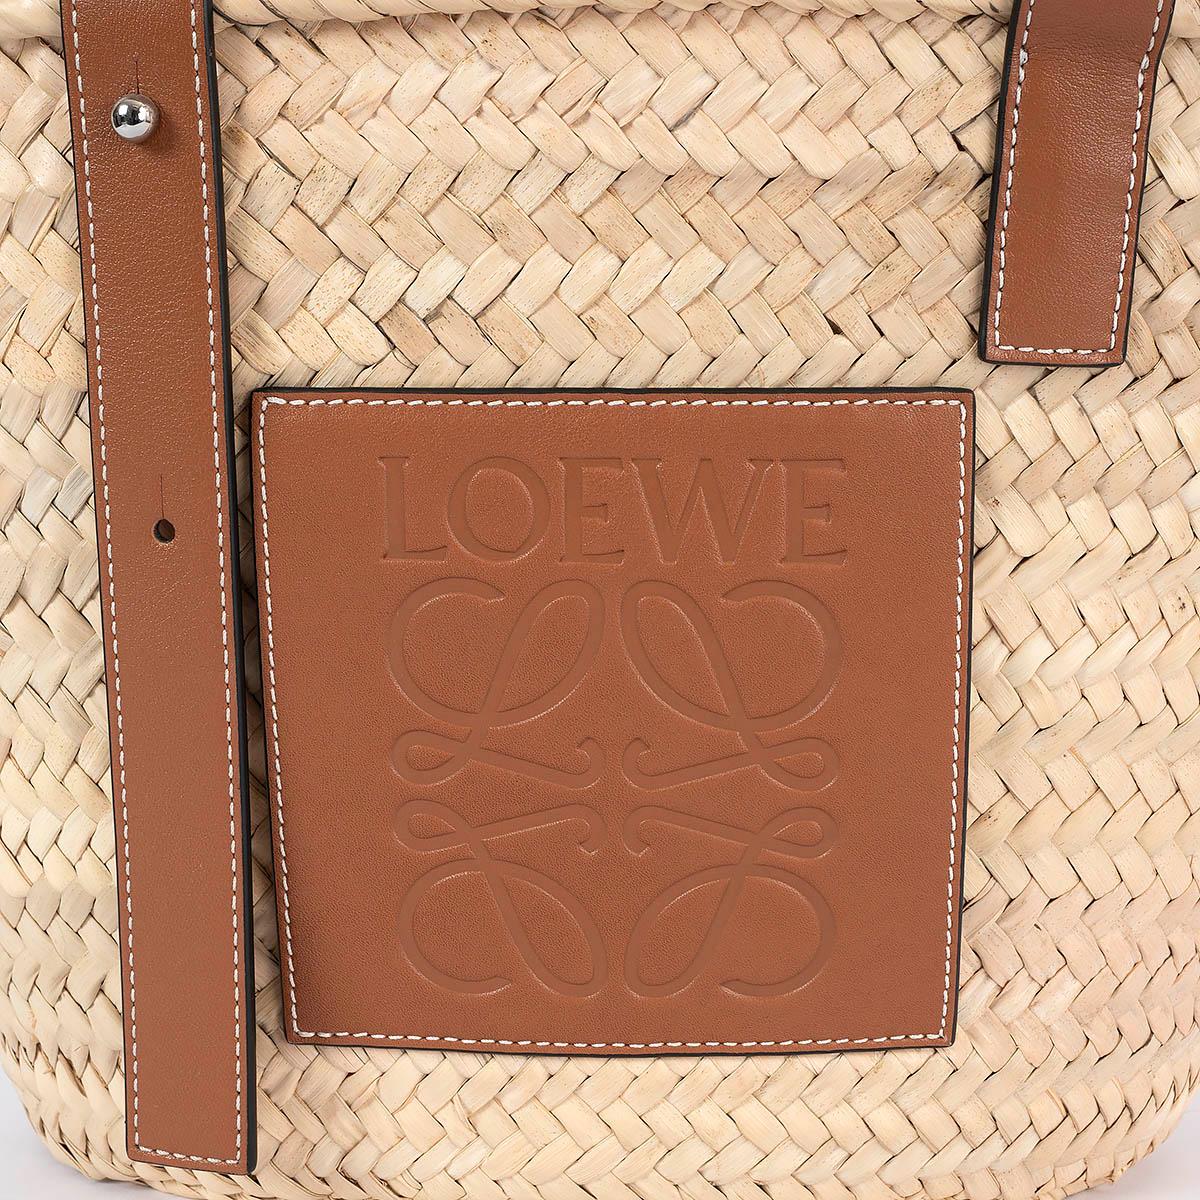 LOEWE natural palm leaf & leather BASKET MEDIUM Tote Bag 2